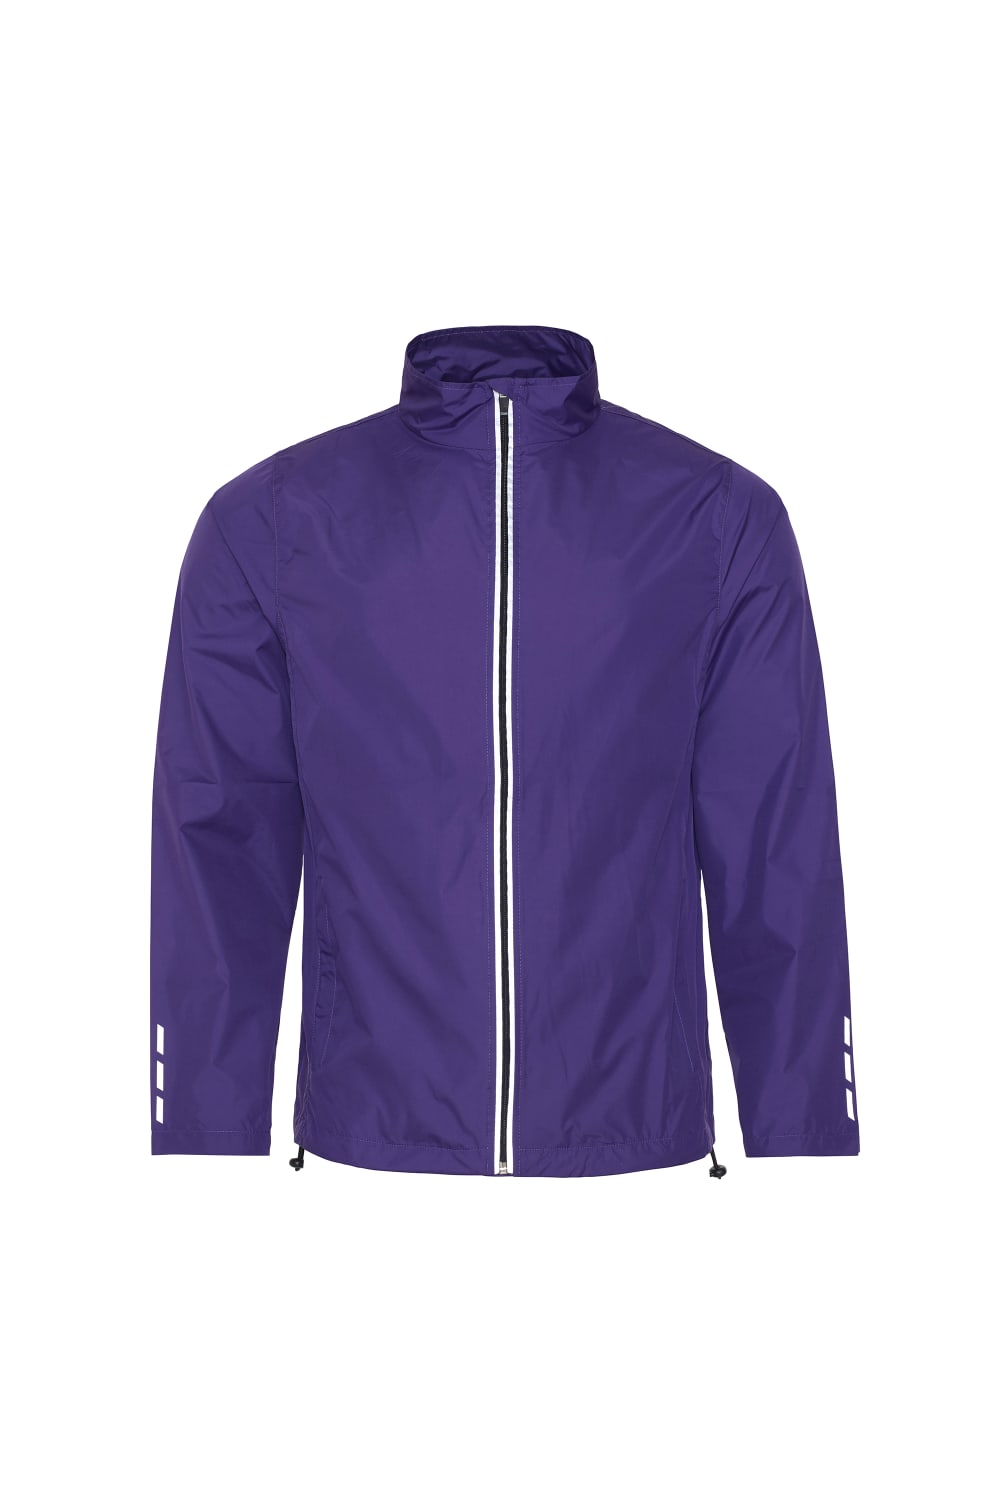 AWDis Just Cool Adults Unisex Showerproof Running Jacket (Purple)